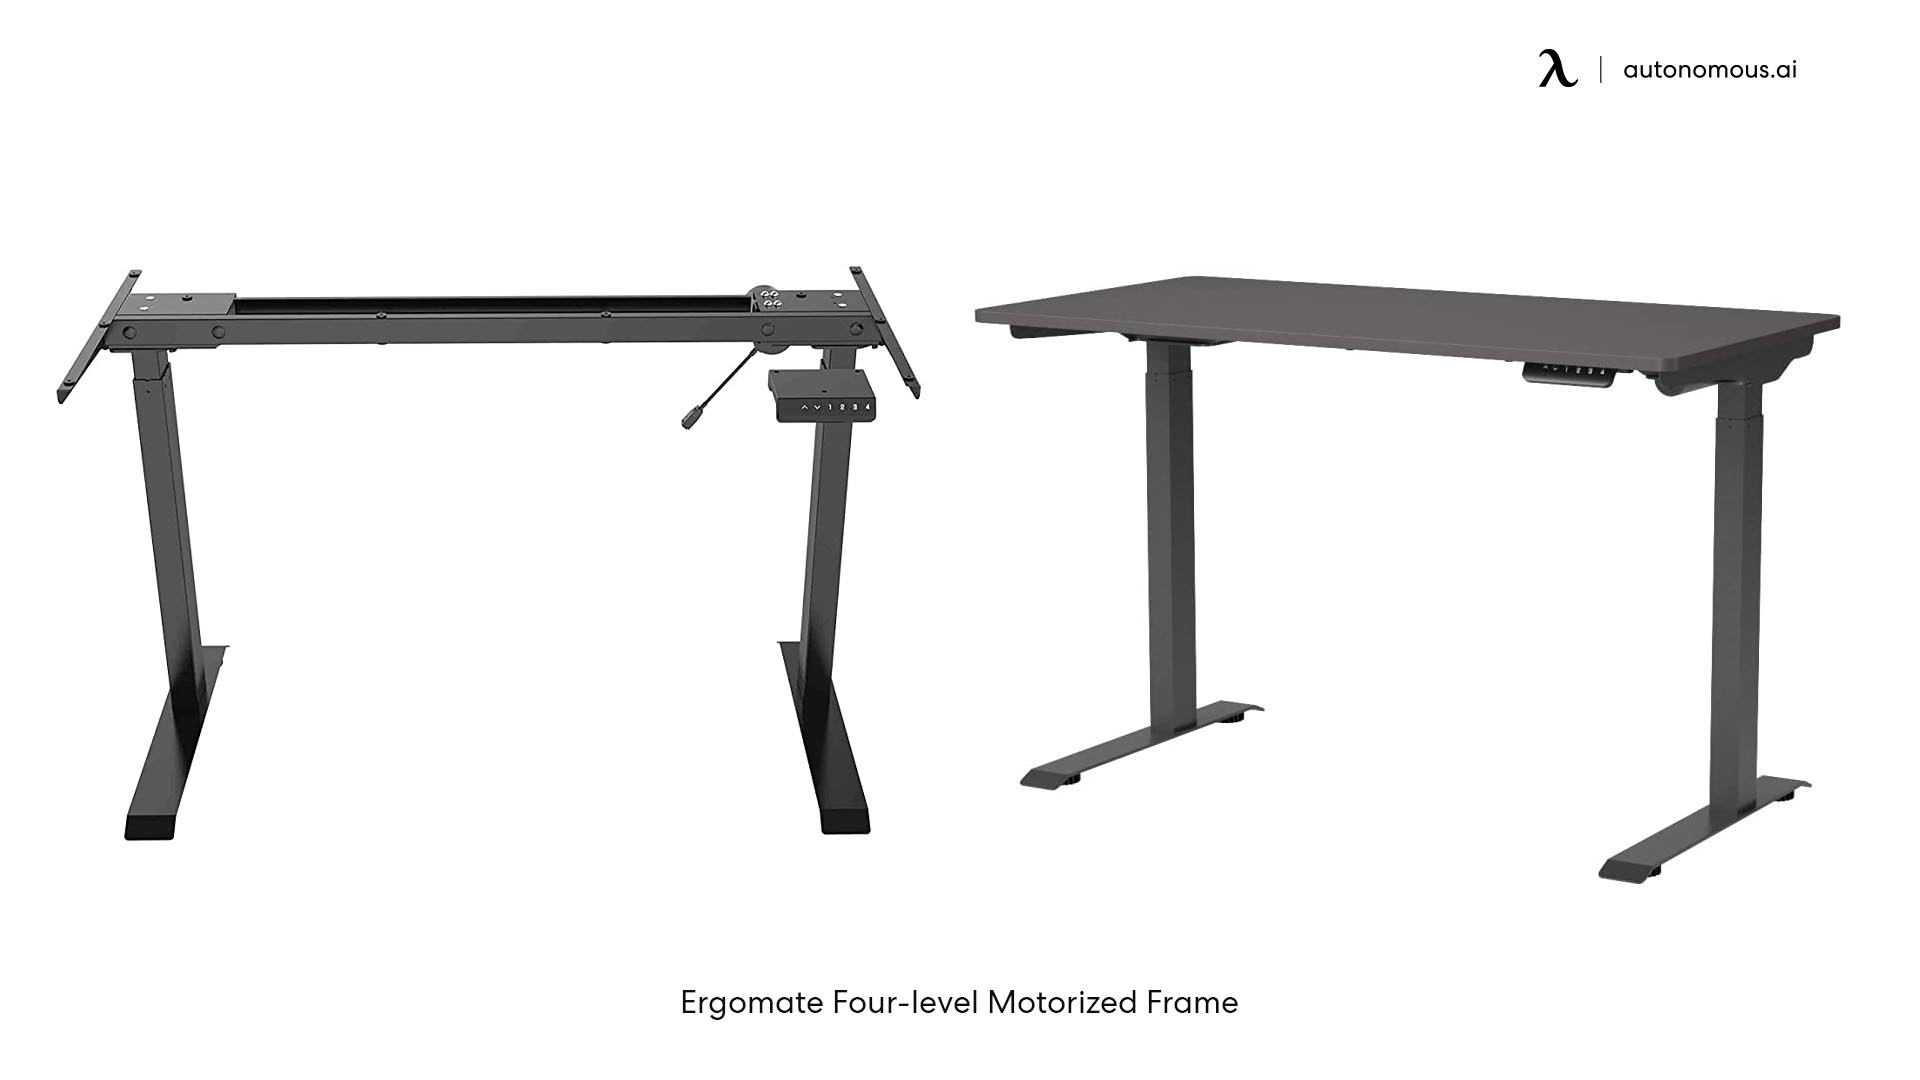 Ergomate Four-level Motorized Frame